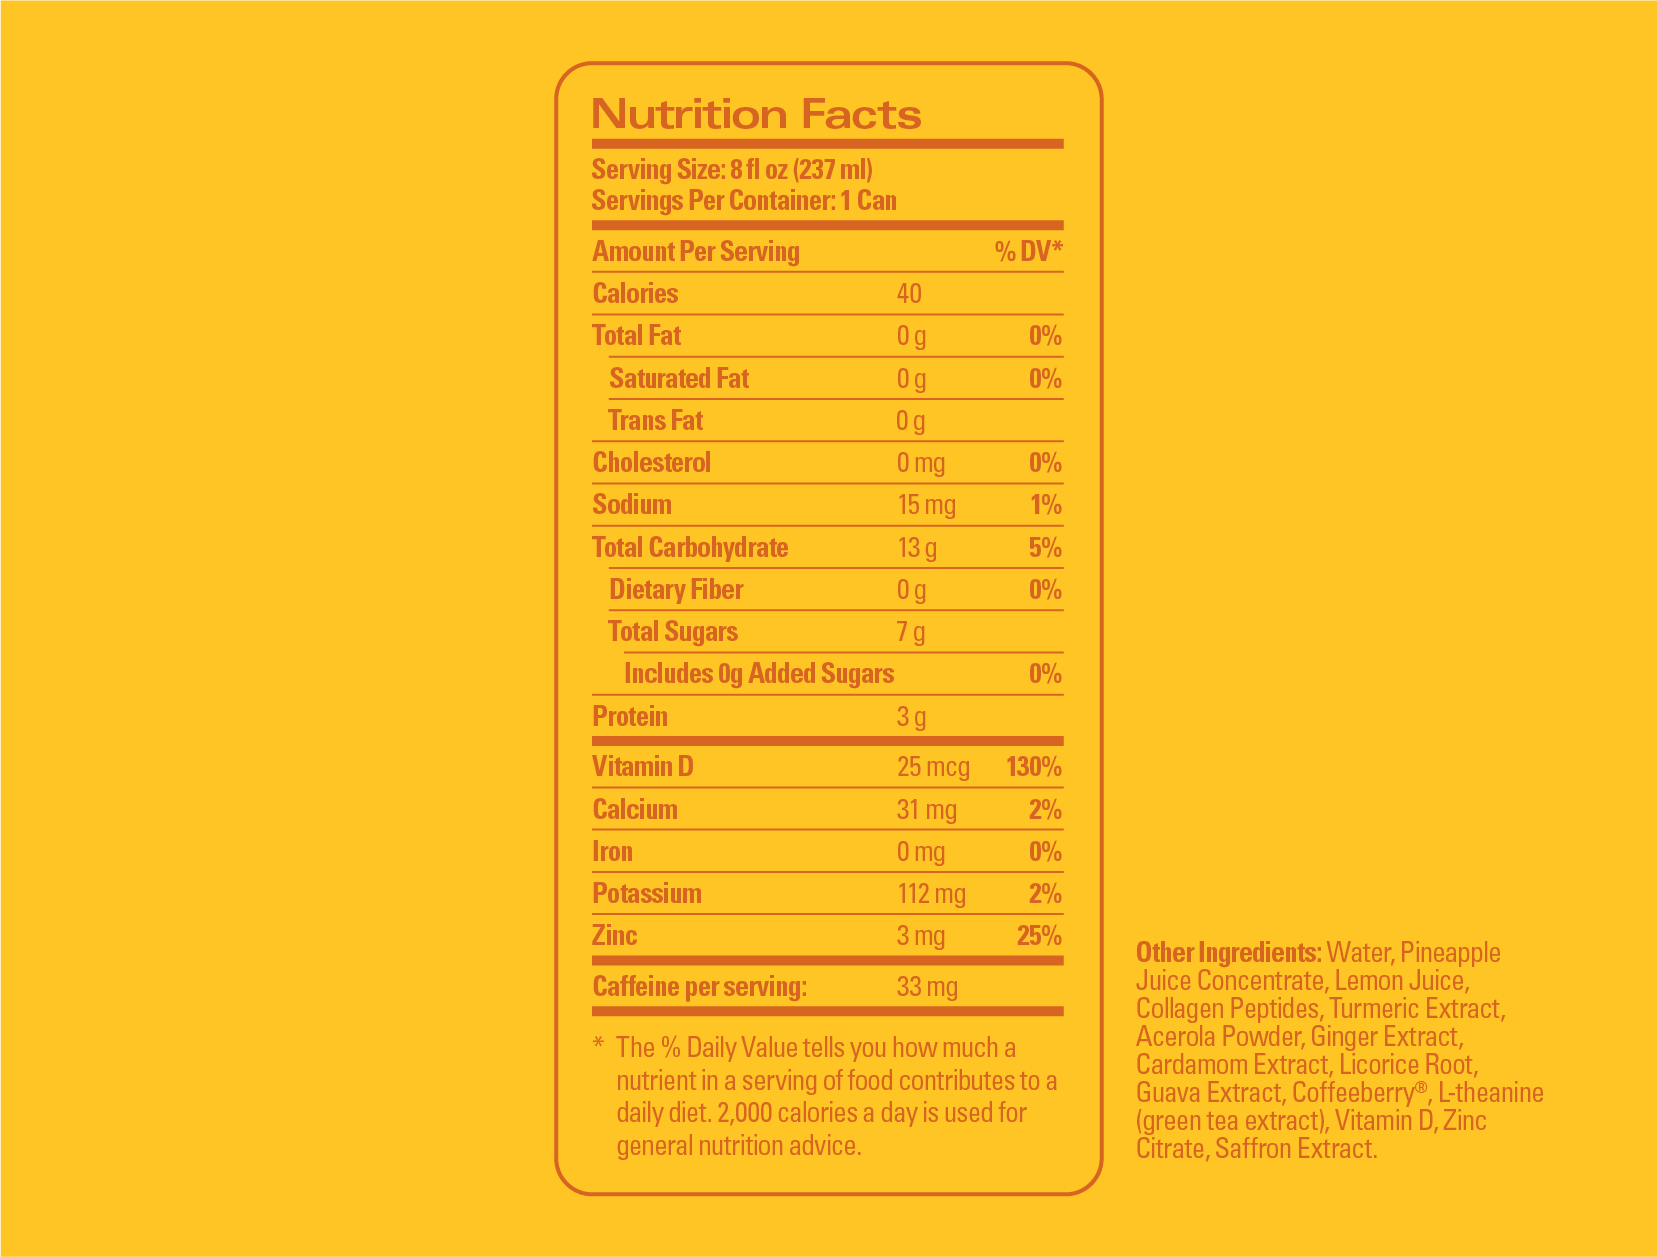 Nutrition Facts label panel for Kin Euphorics Actual Sunshine